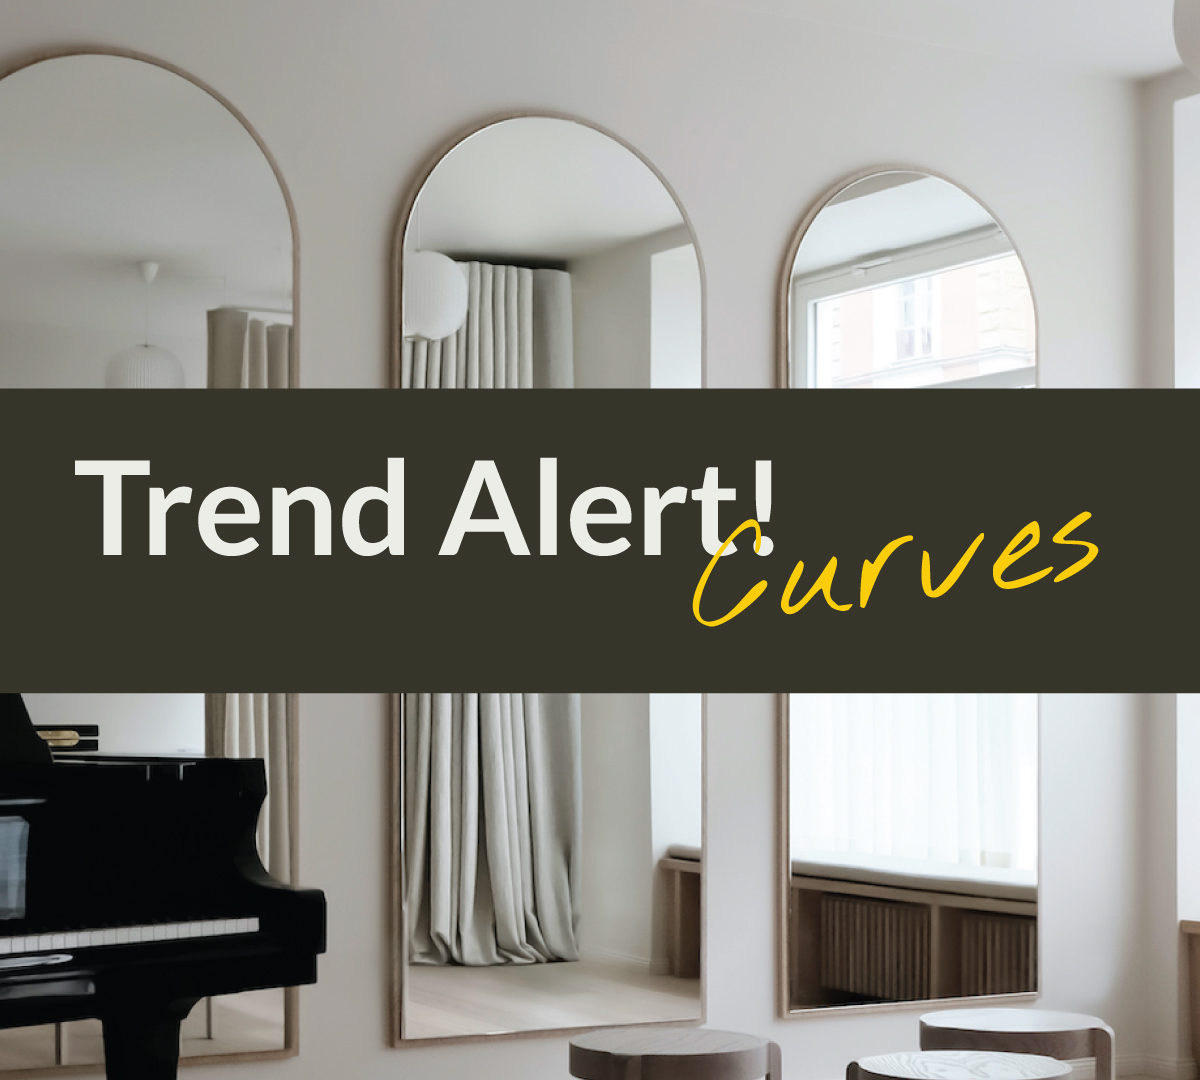 Trend Alert – Curves